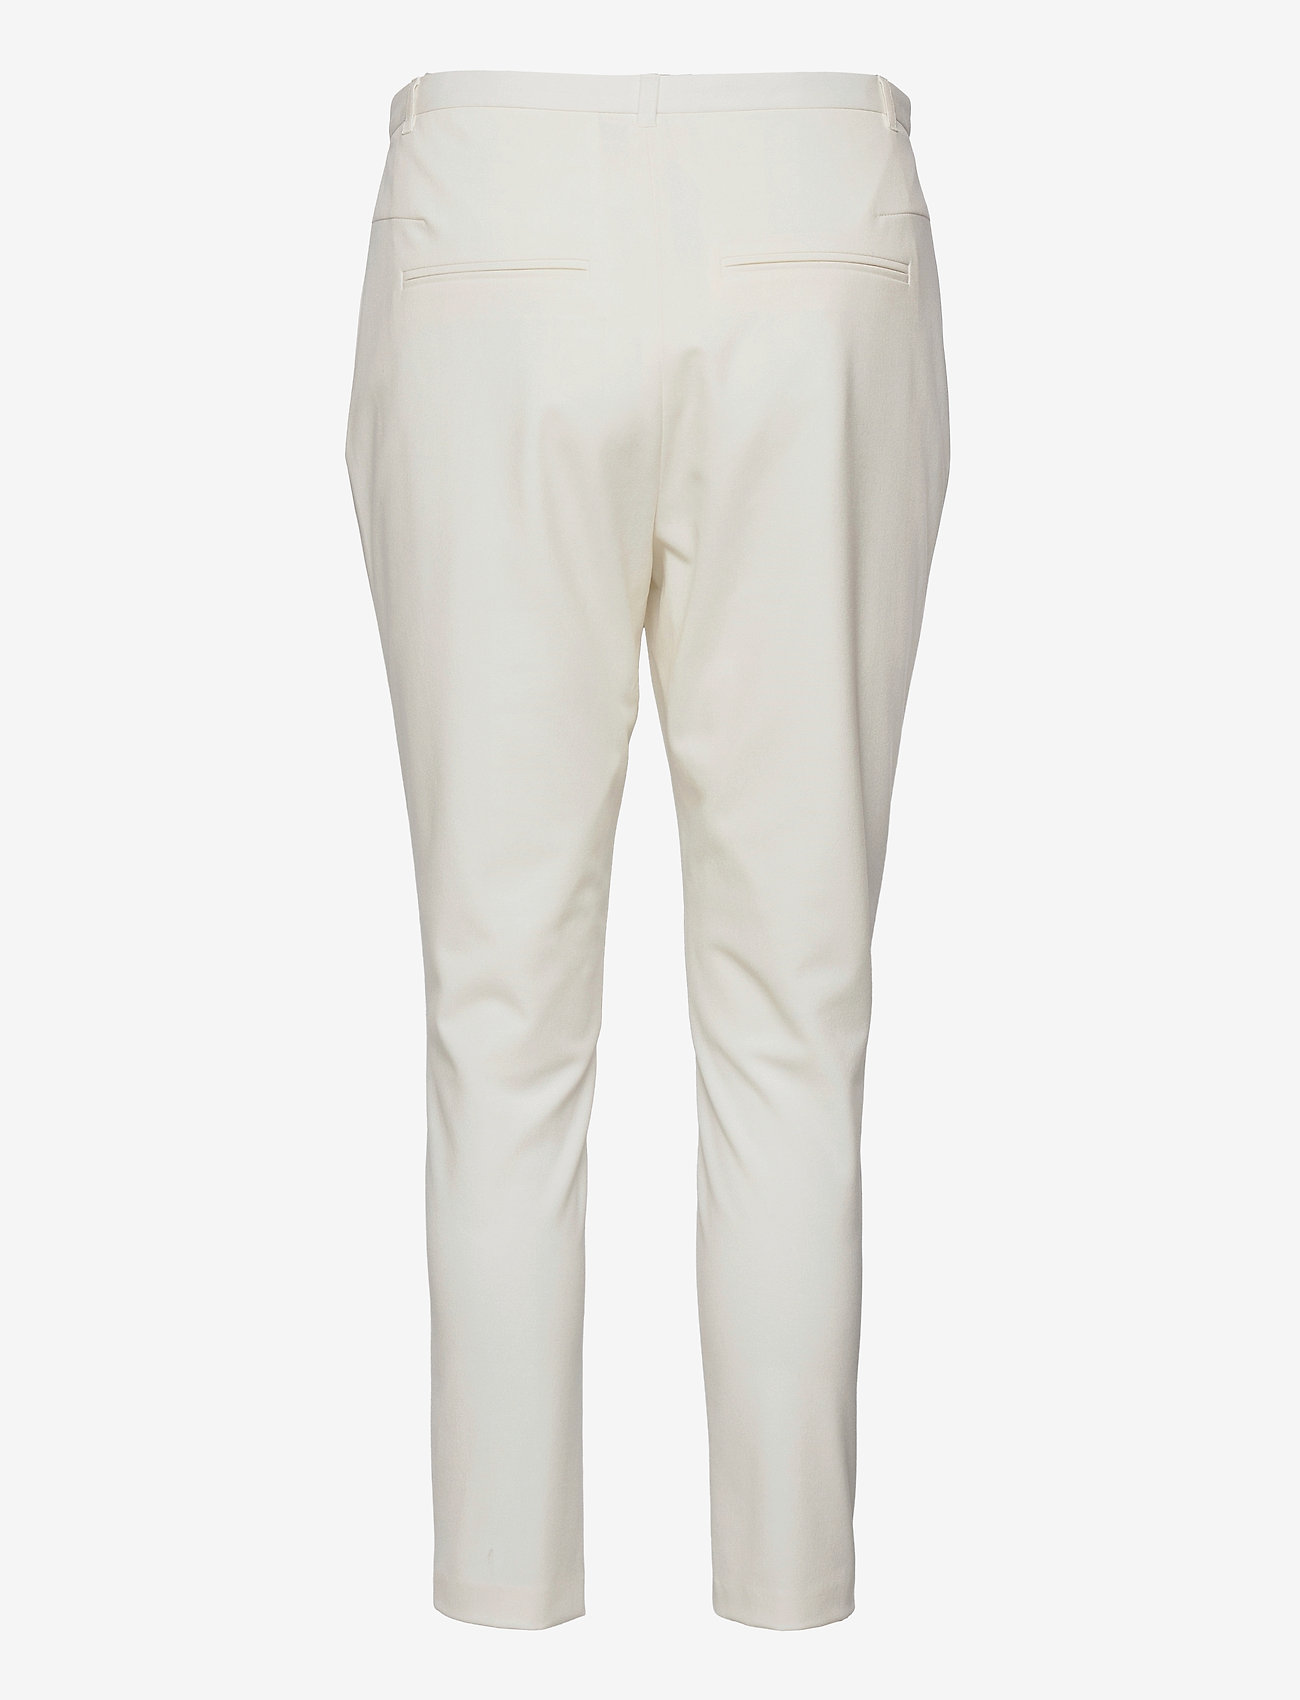 Karen By Simonsen - SydneyKB Fashion Pants - slim fit trousers - snow white - 1